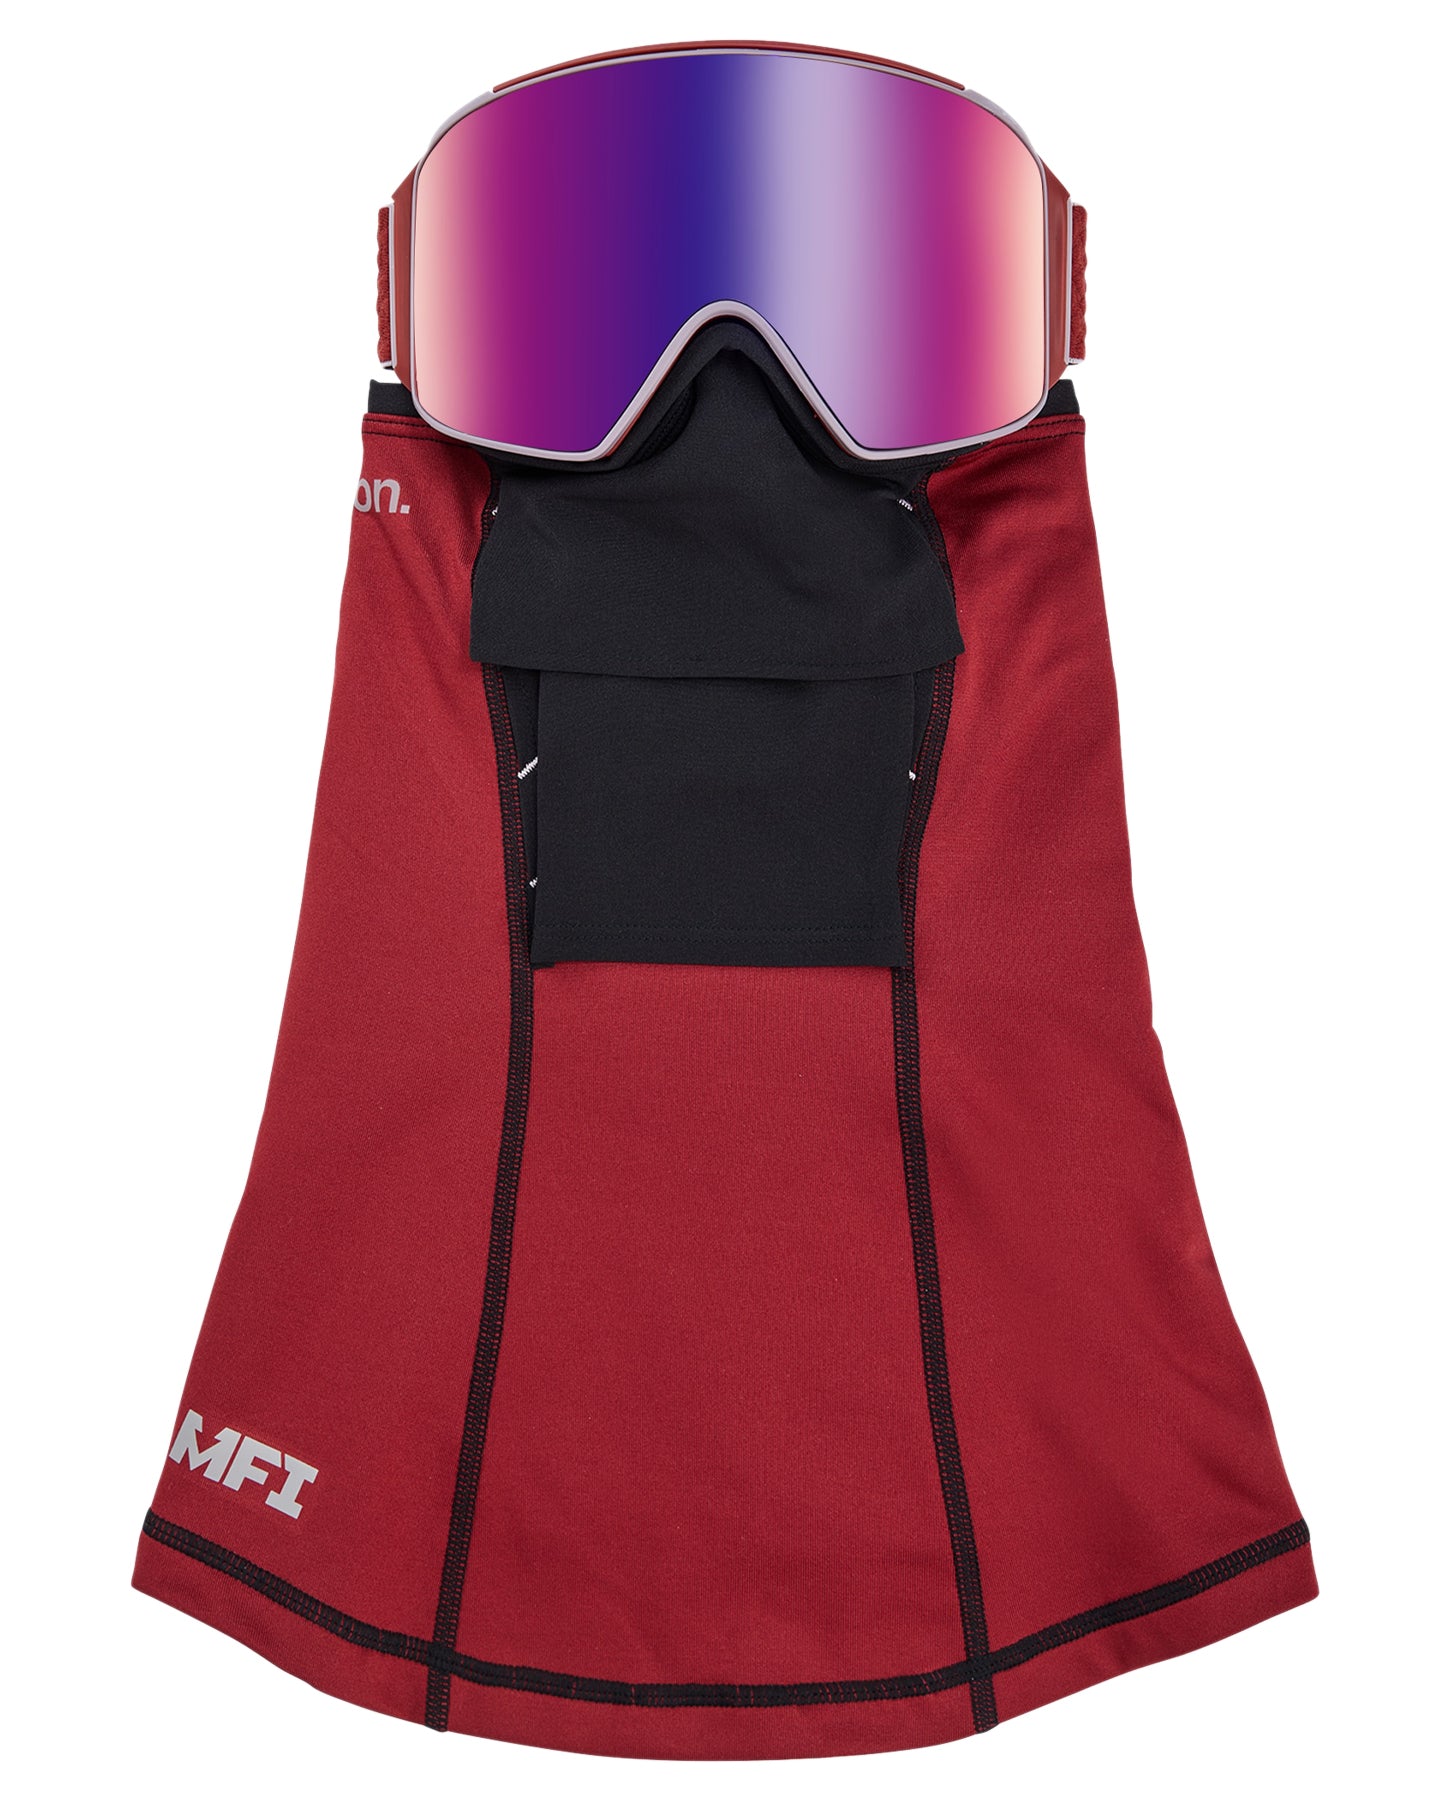 Anon M4 Cylindrical Snow Goggles + Bonus Lens + Mfi® Face Mask - Mars/Perceive Sunny Red Lens Snow Goggles - Mens - Trojan Wake Ski Snow